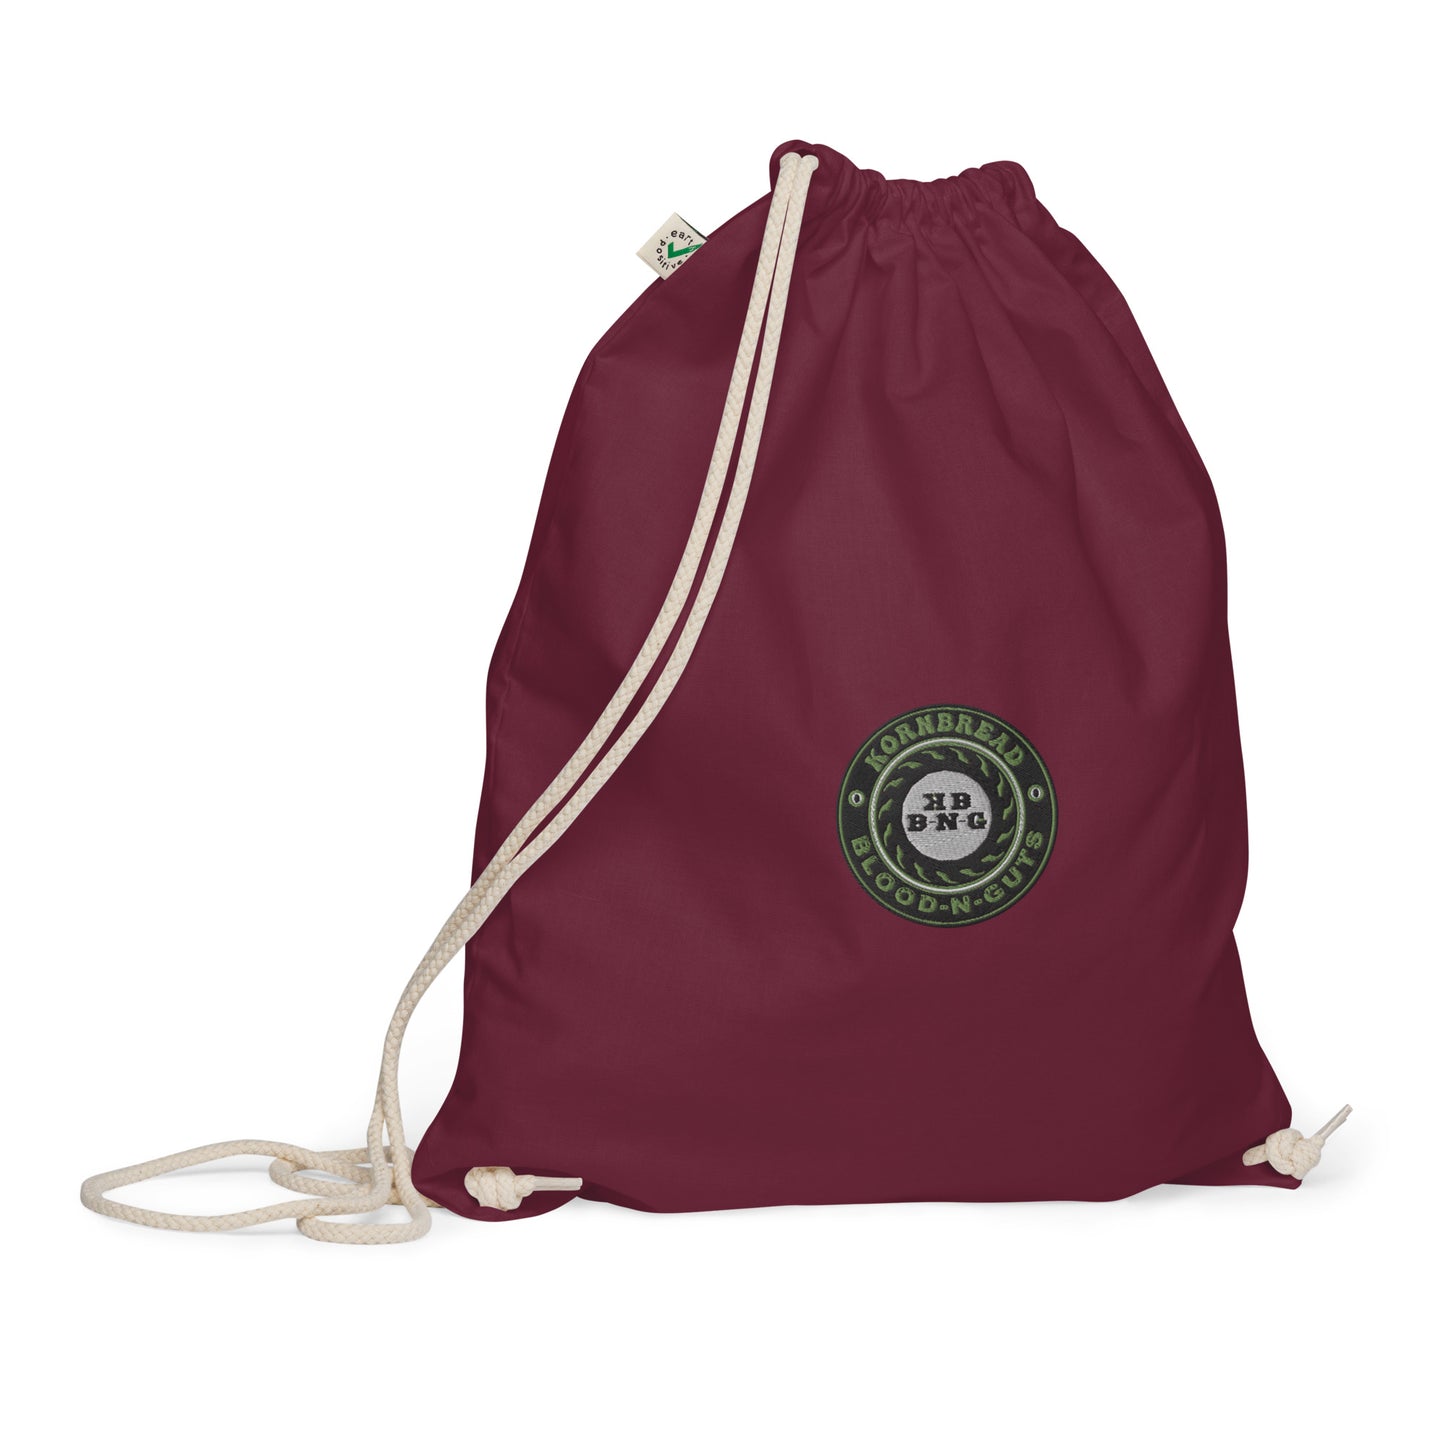 KBBNG Embroidered Badge Organic Cotton Drawstring Bag